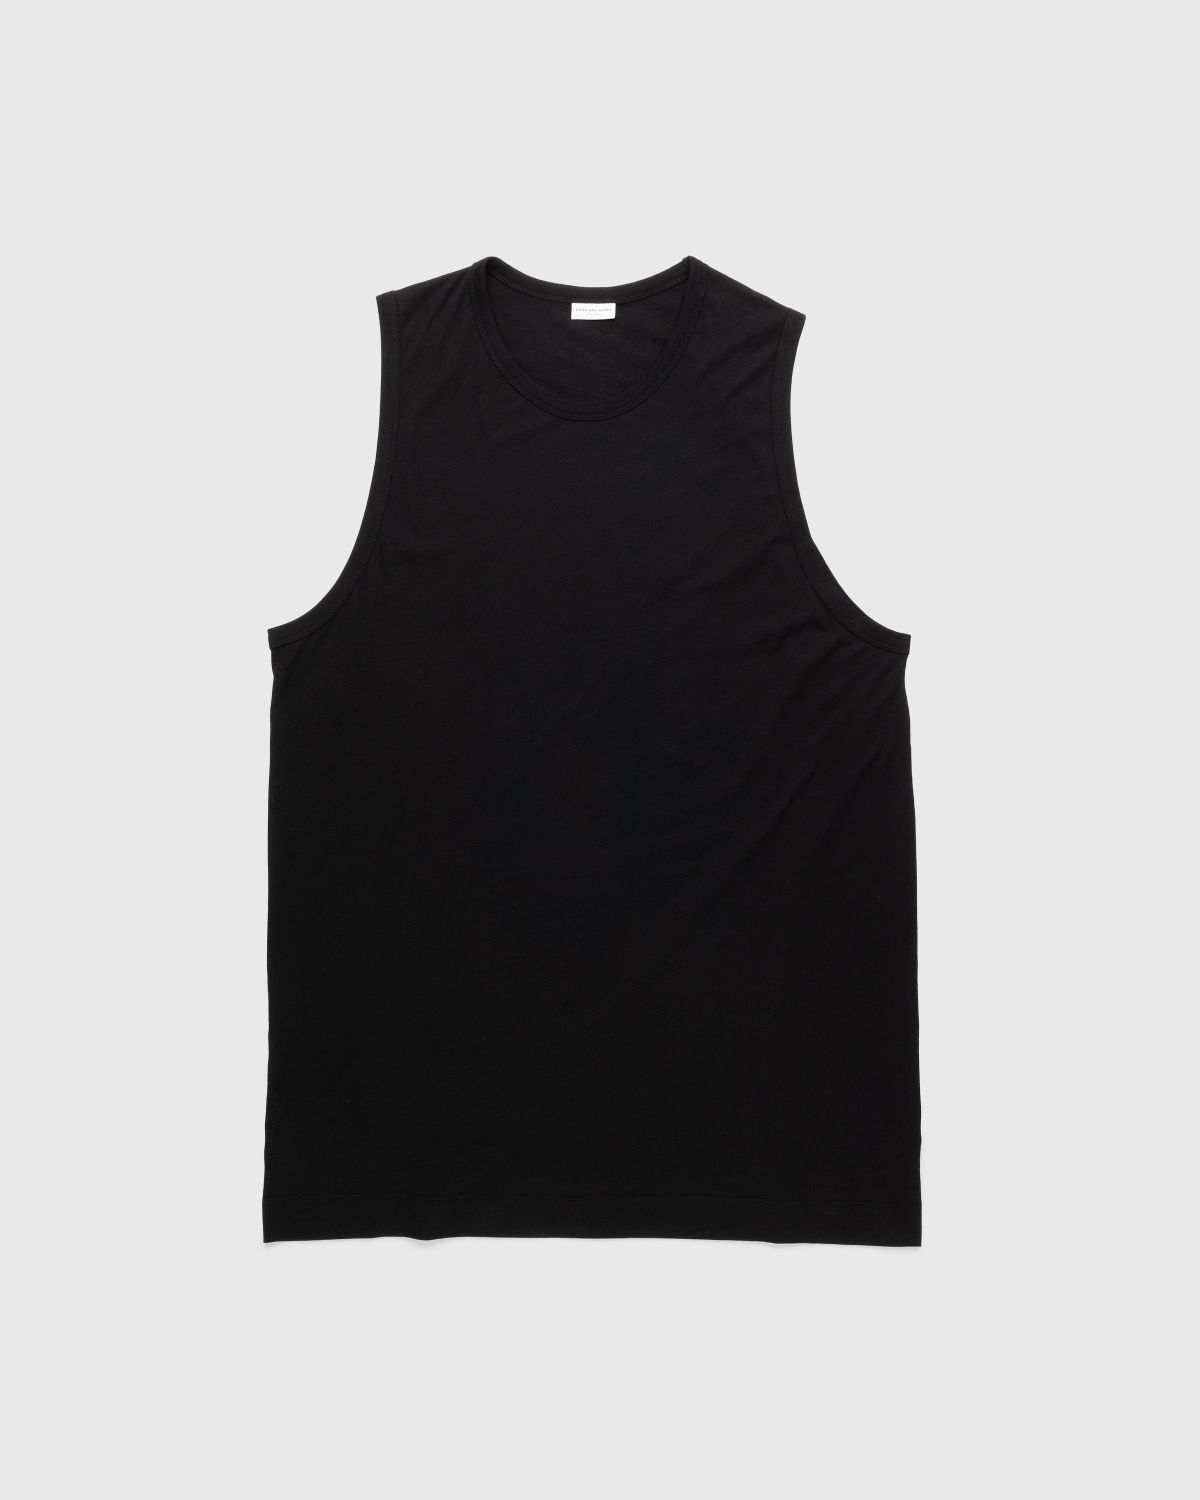 Dries van Noten – Hanator Sleeveless T-Shirt Black - T-Shirts - Black - Image 1